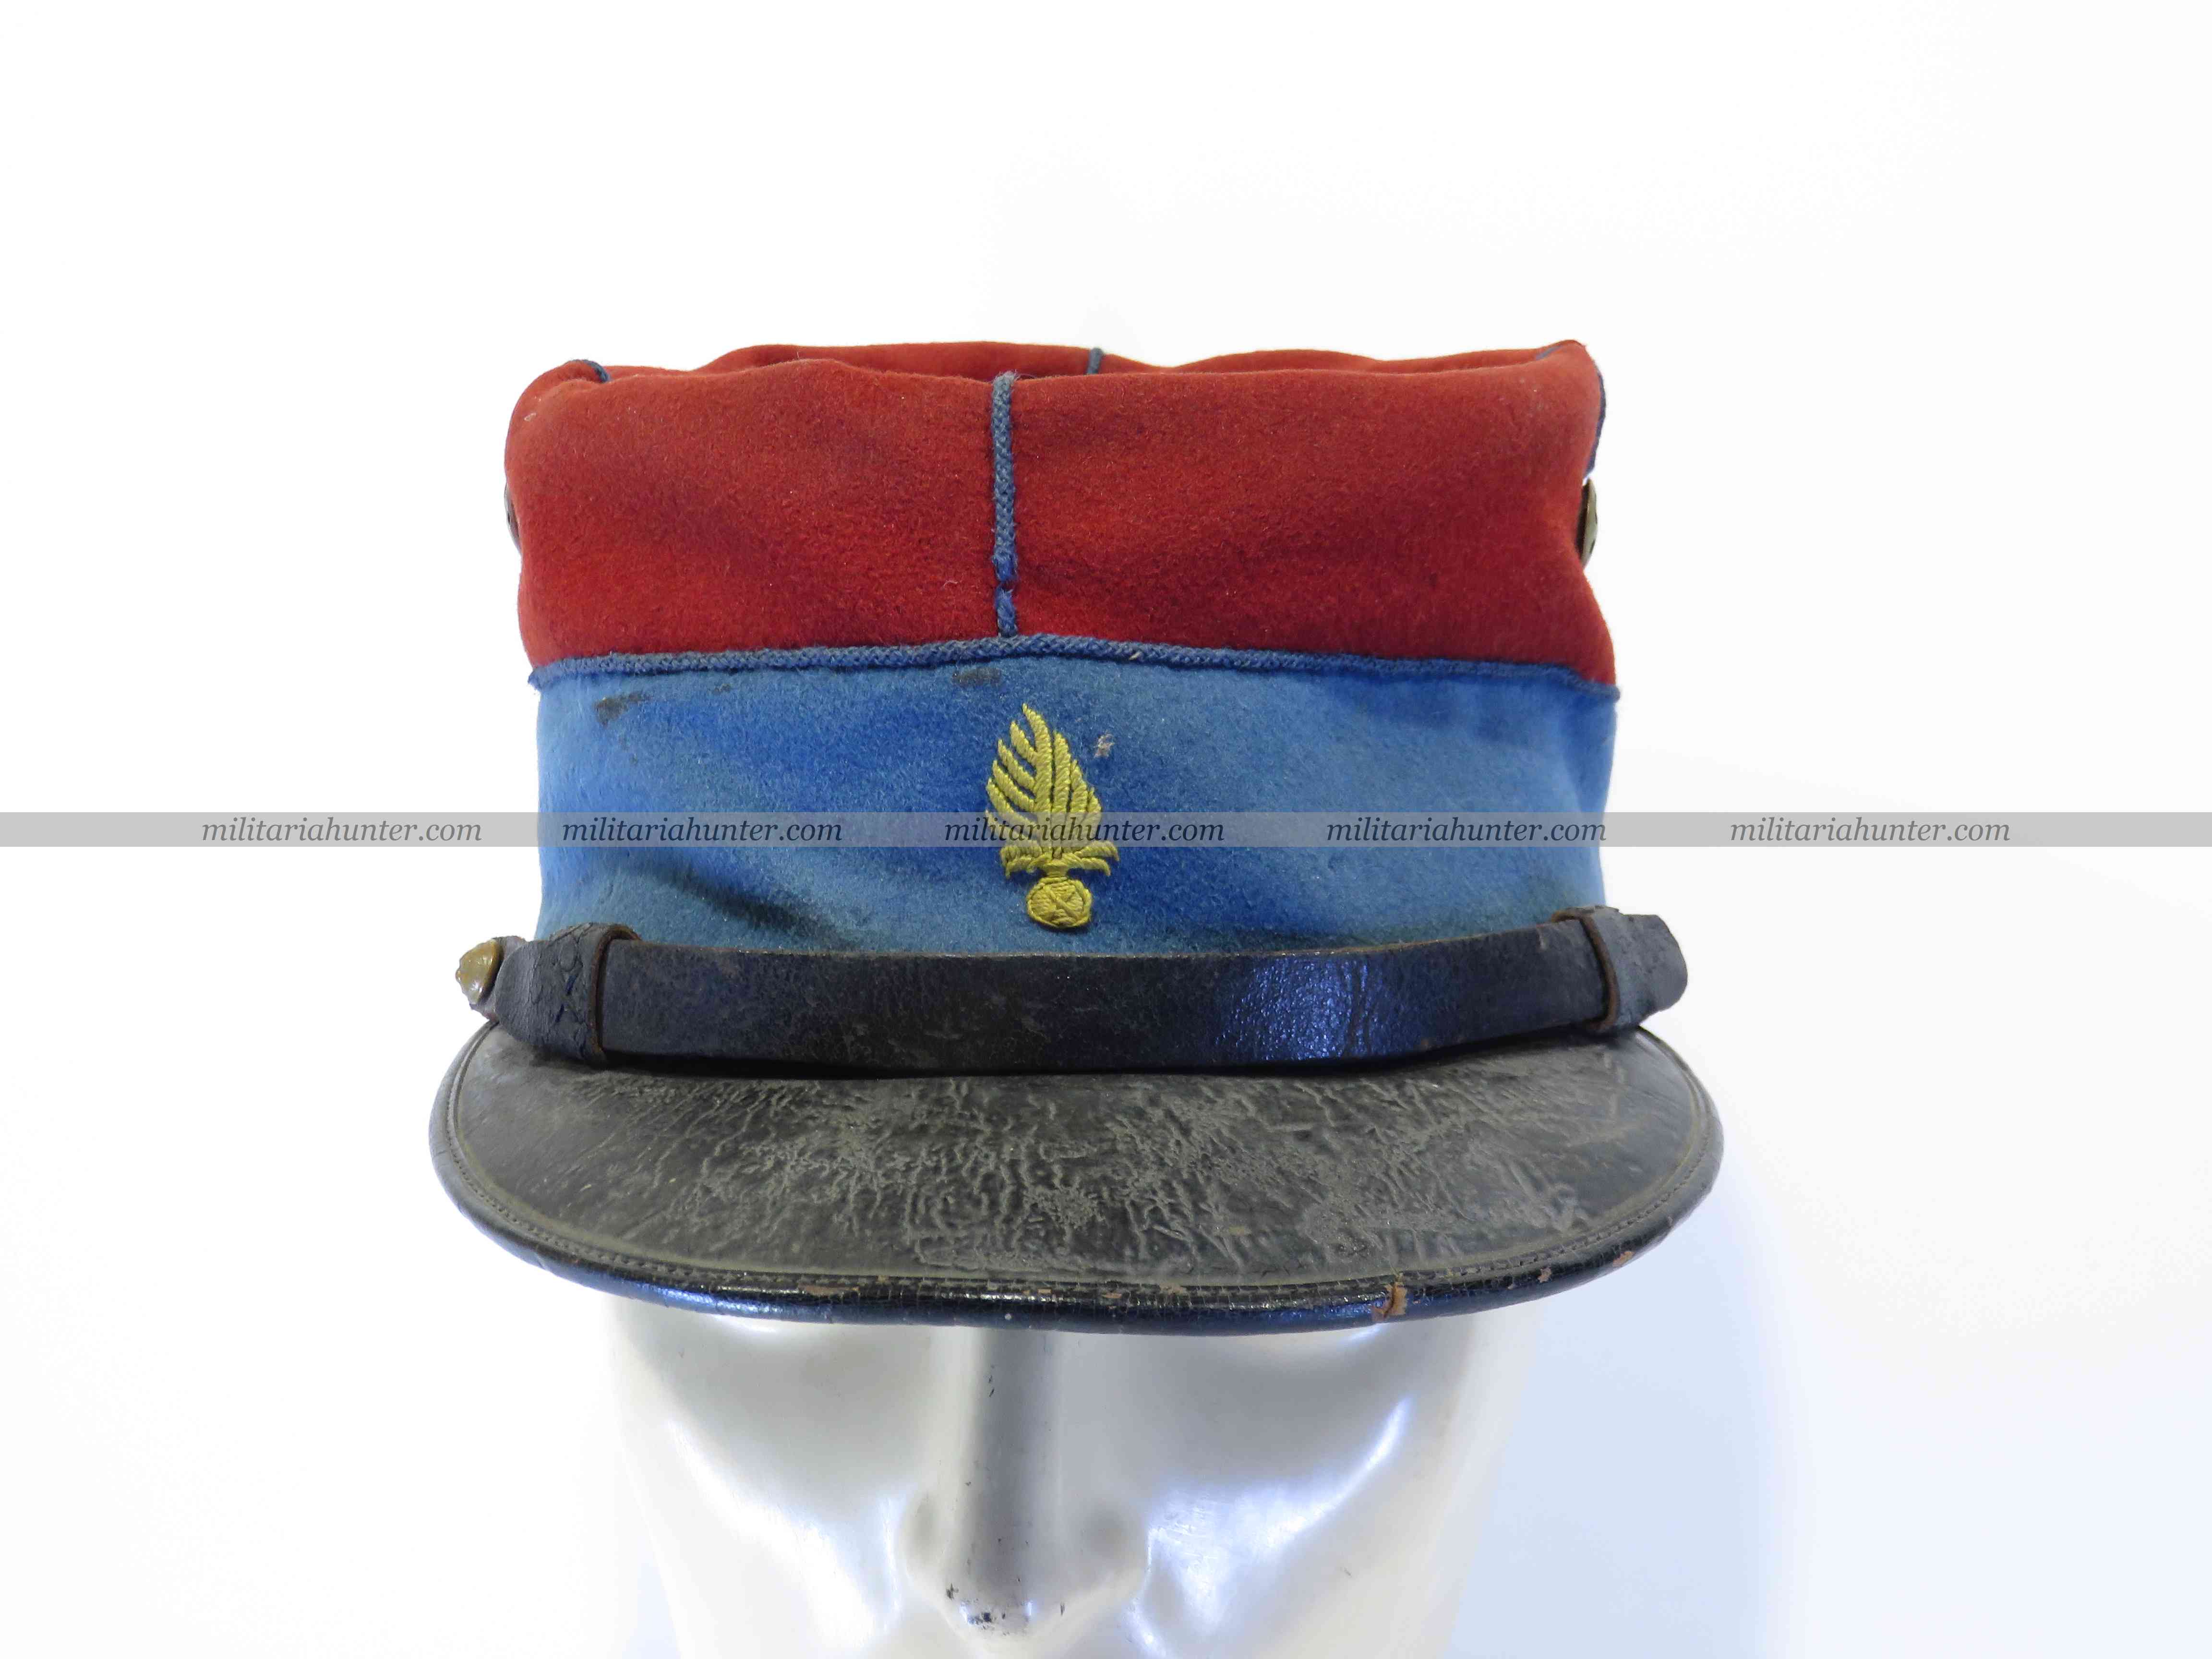 militaria : Képi 1884 d'élève officier - ww1 french Cadet Officer visor cap